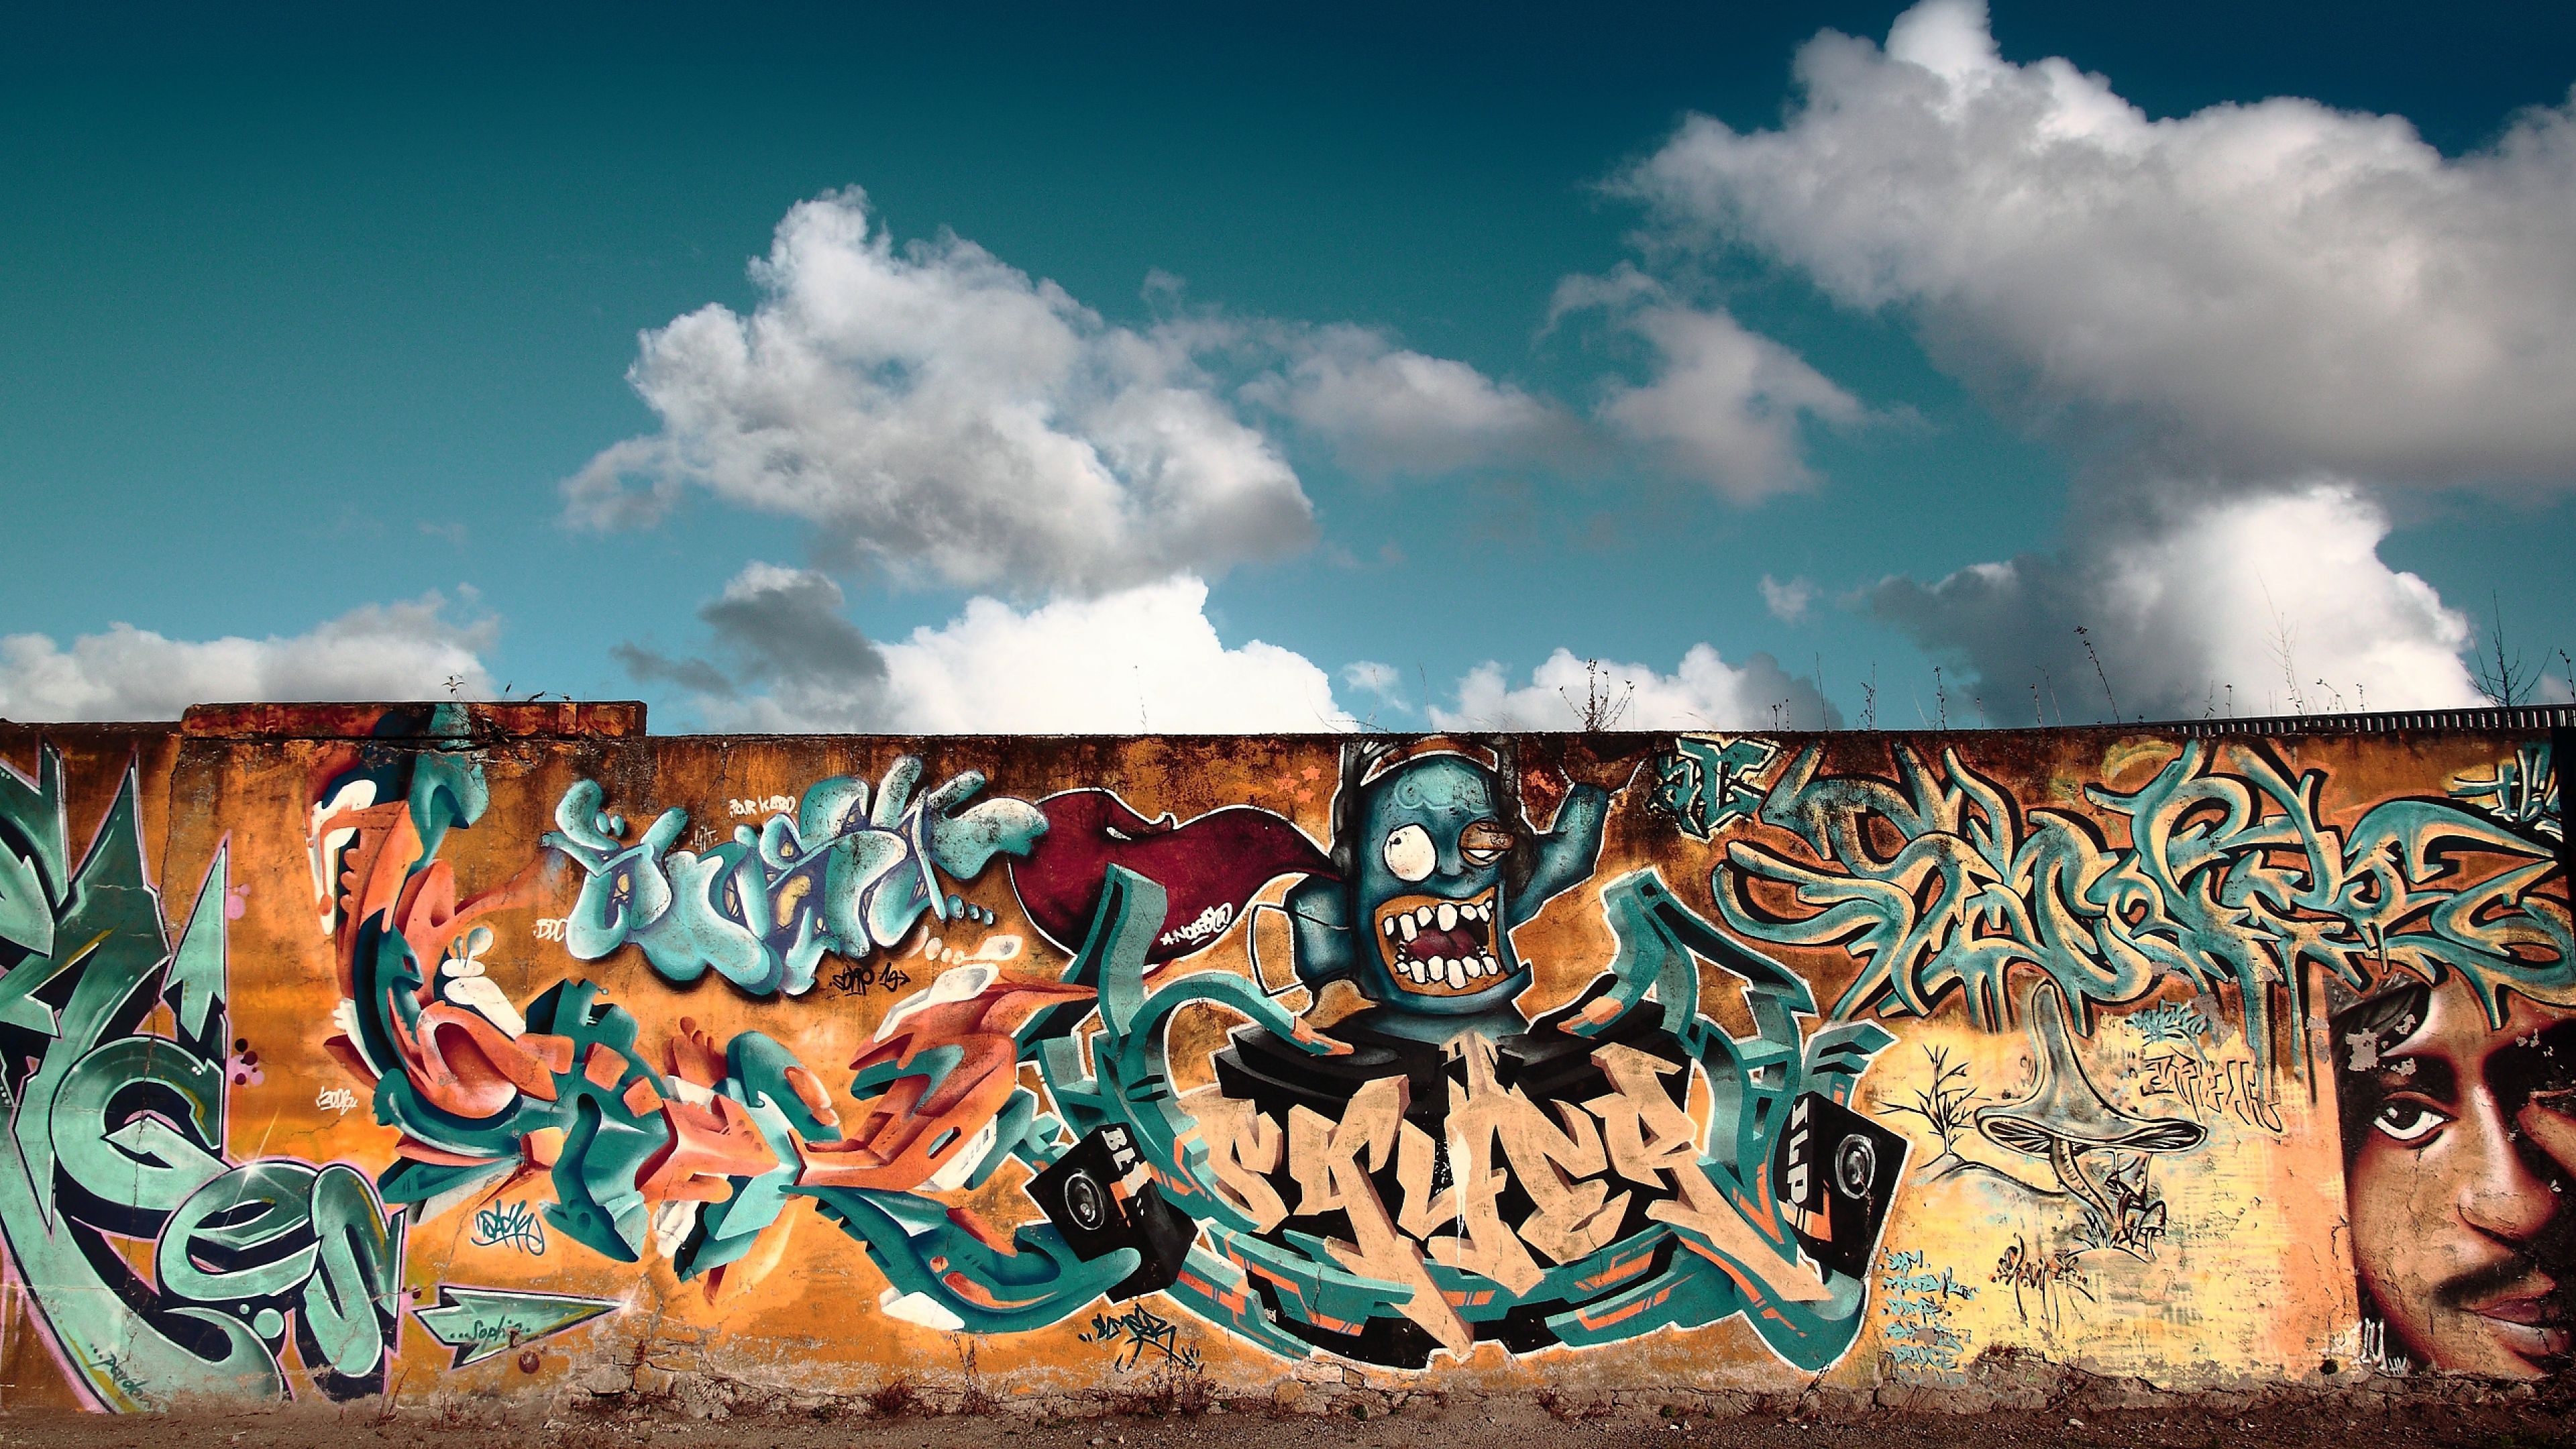 Graffiti City Wallpaper HD download free